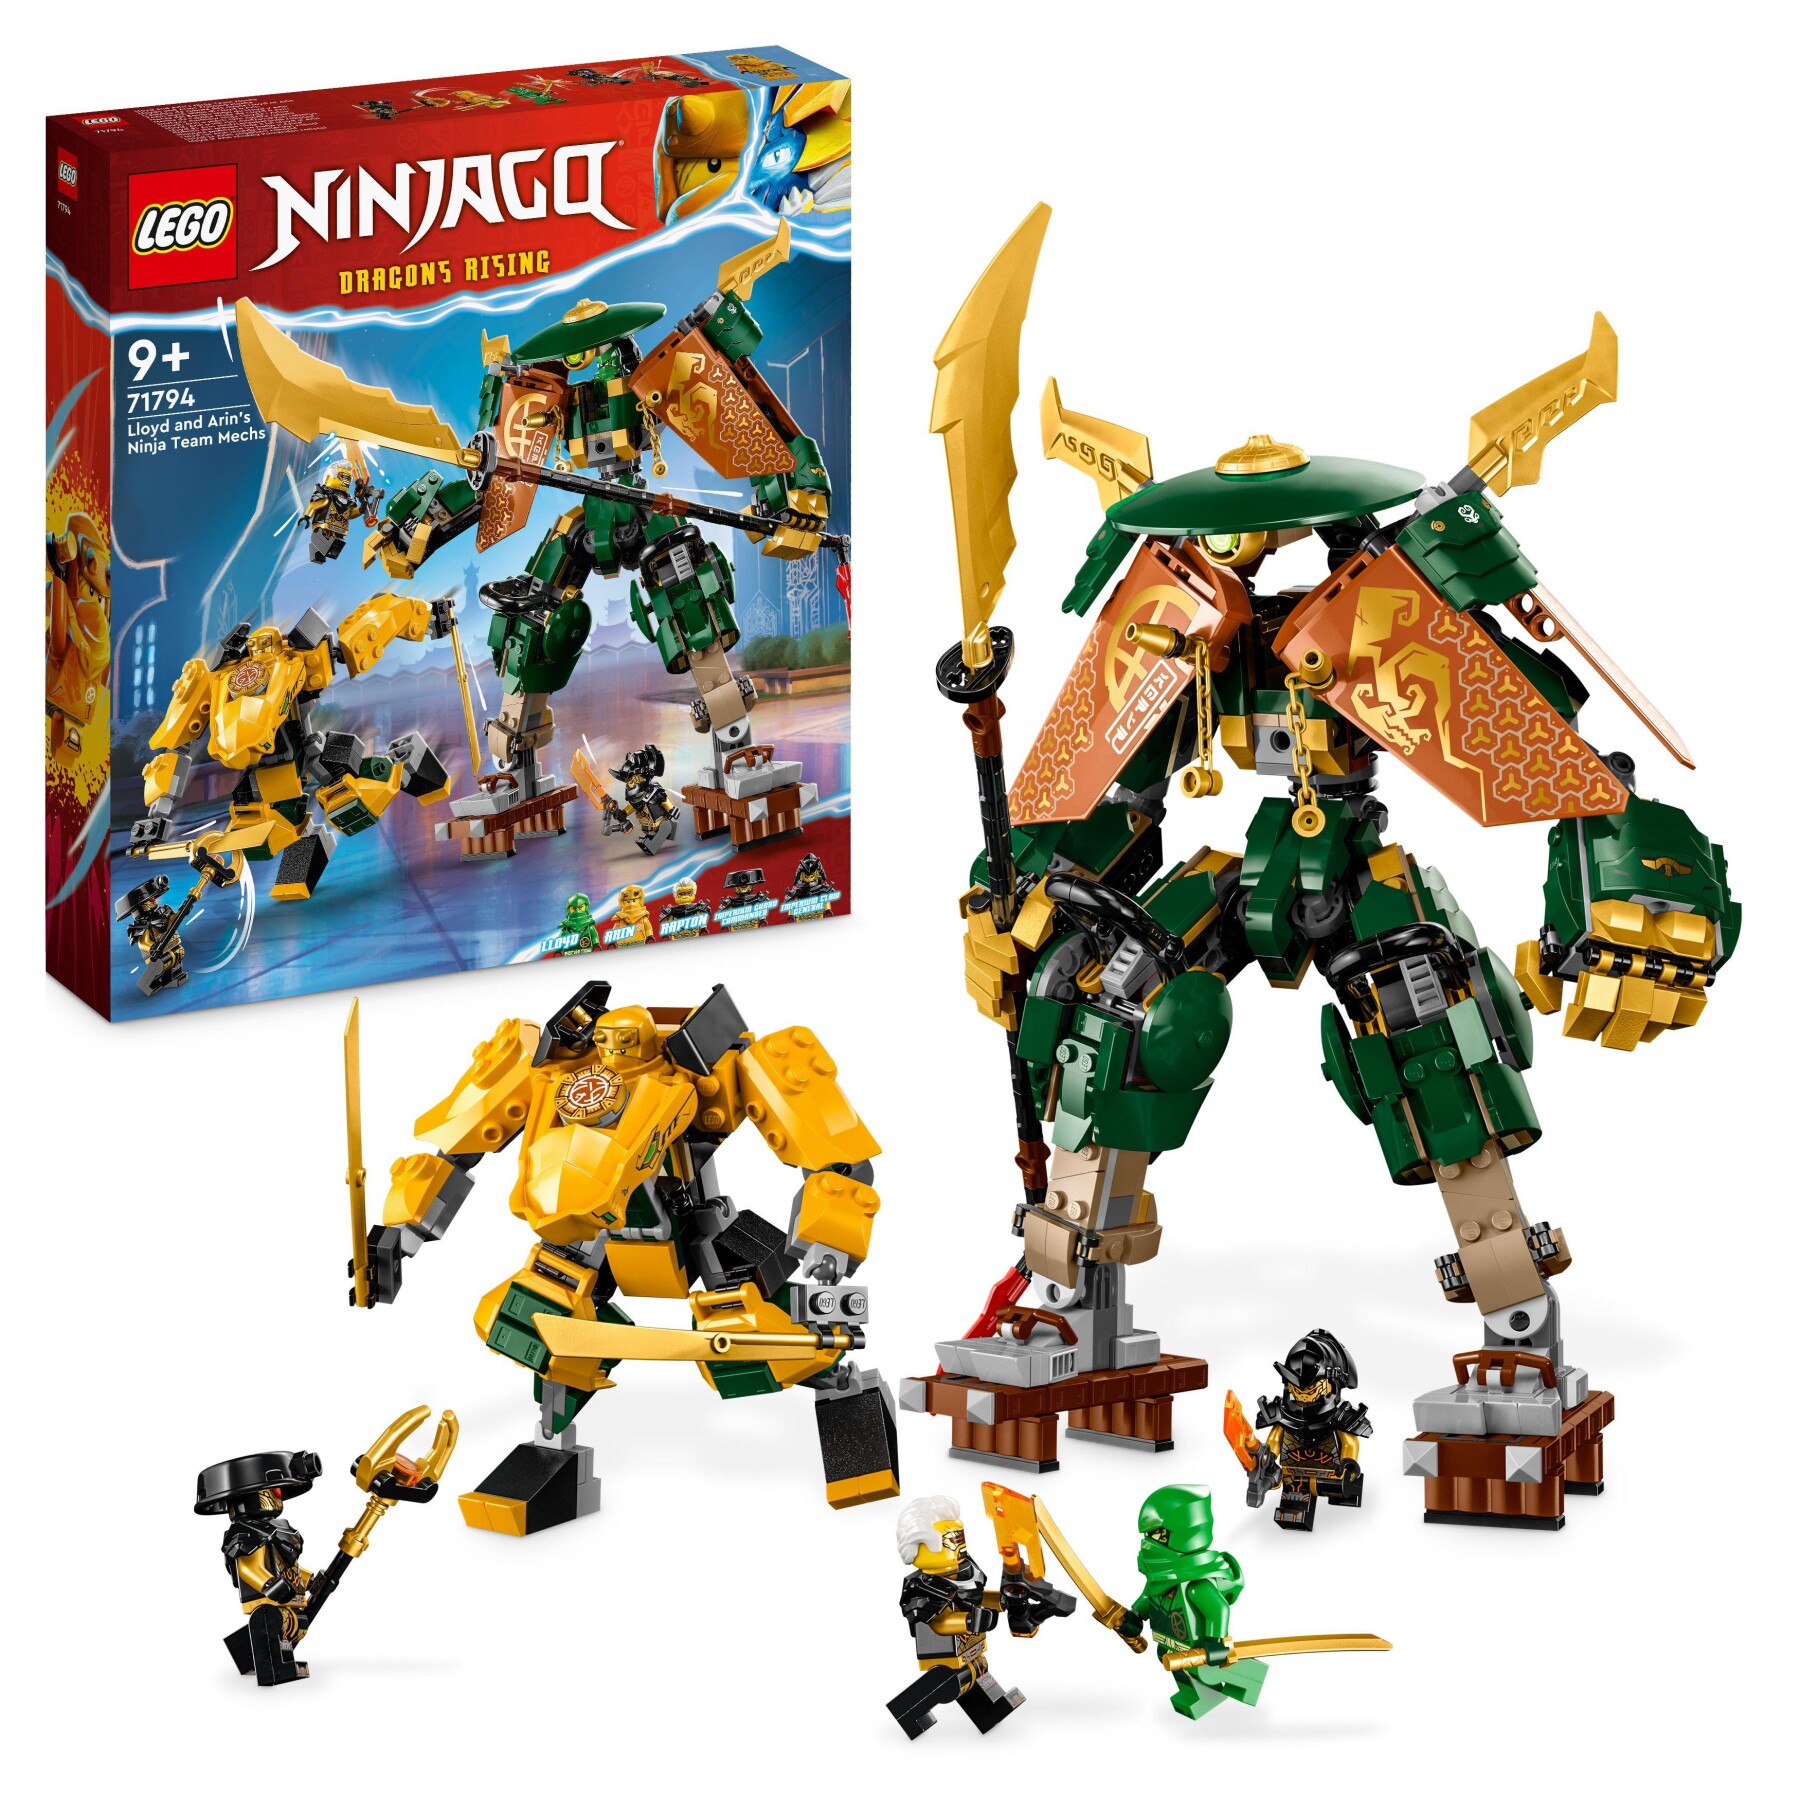 Lego ninjago 71794 team mech ninja di lloyd e arin, set con 2 action figure combinabili e 5 minifigure, giochi per bambini 9+ - LEGO NINJAGO